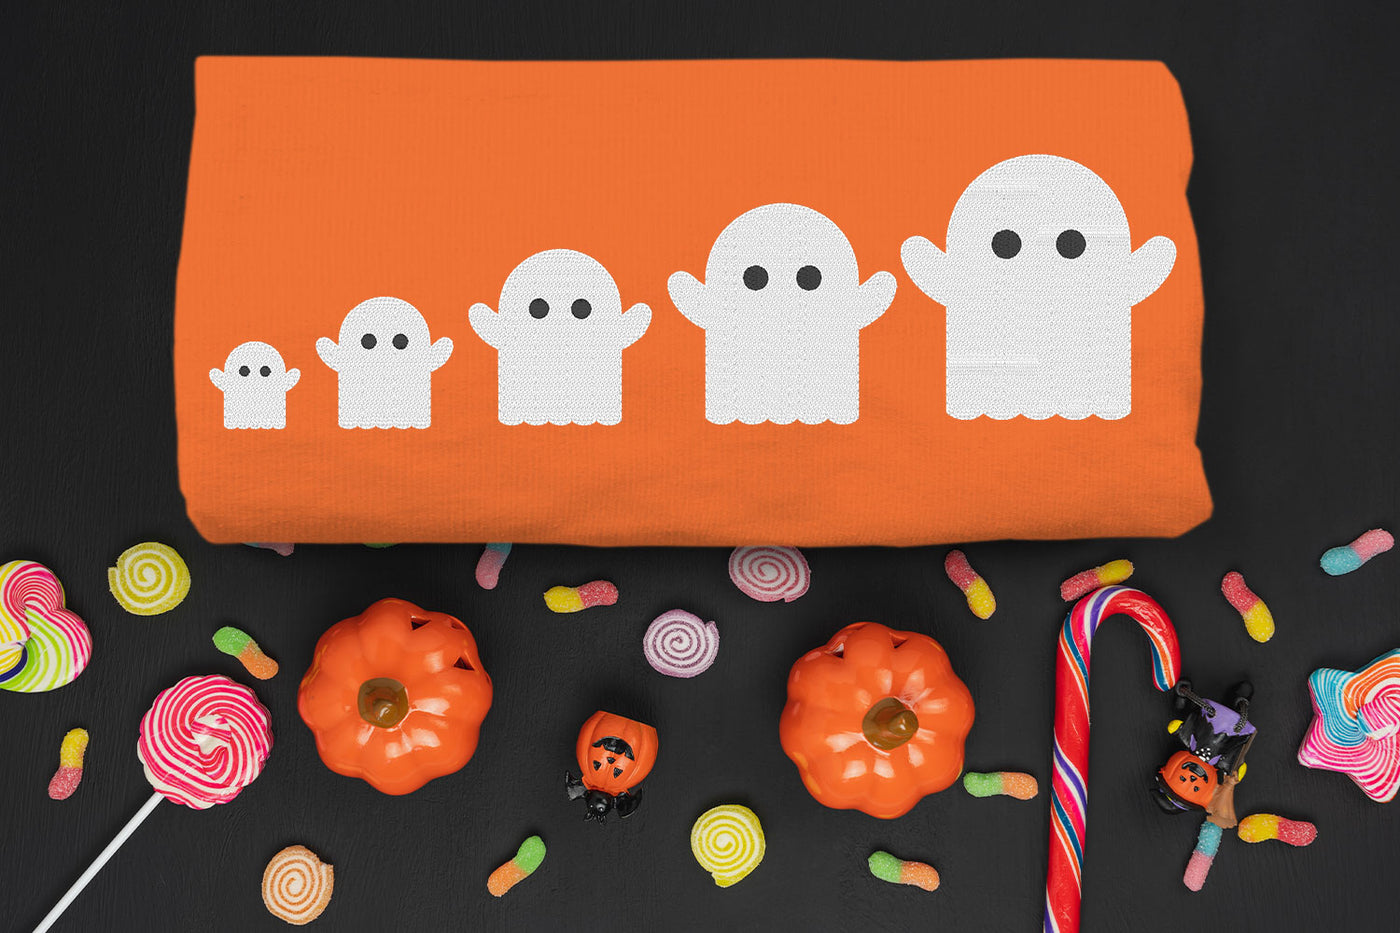 Cute ghost mini embroidery design file in 5 sizes